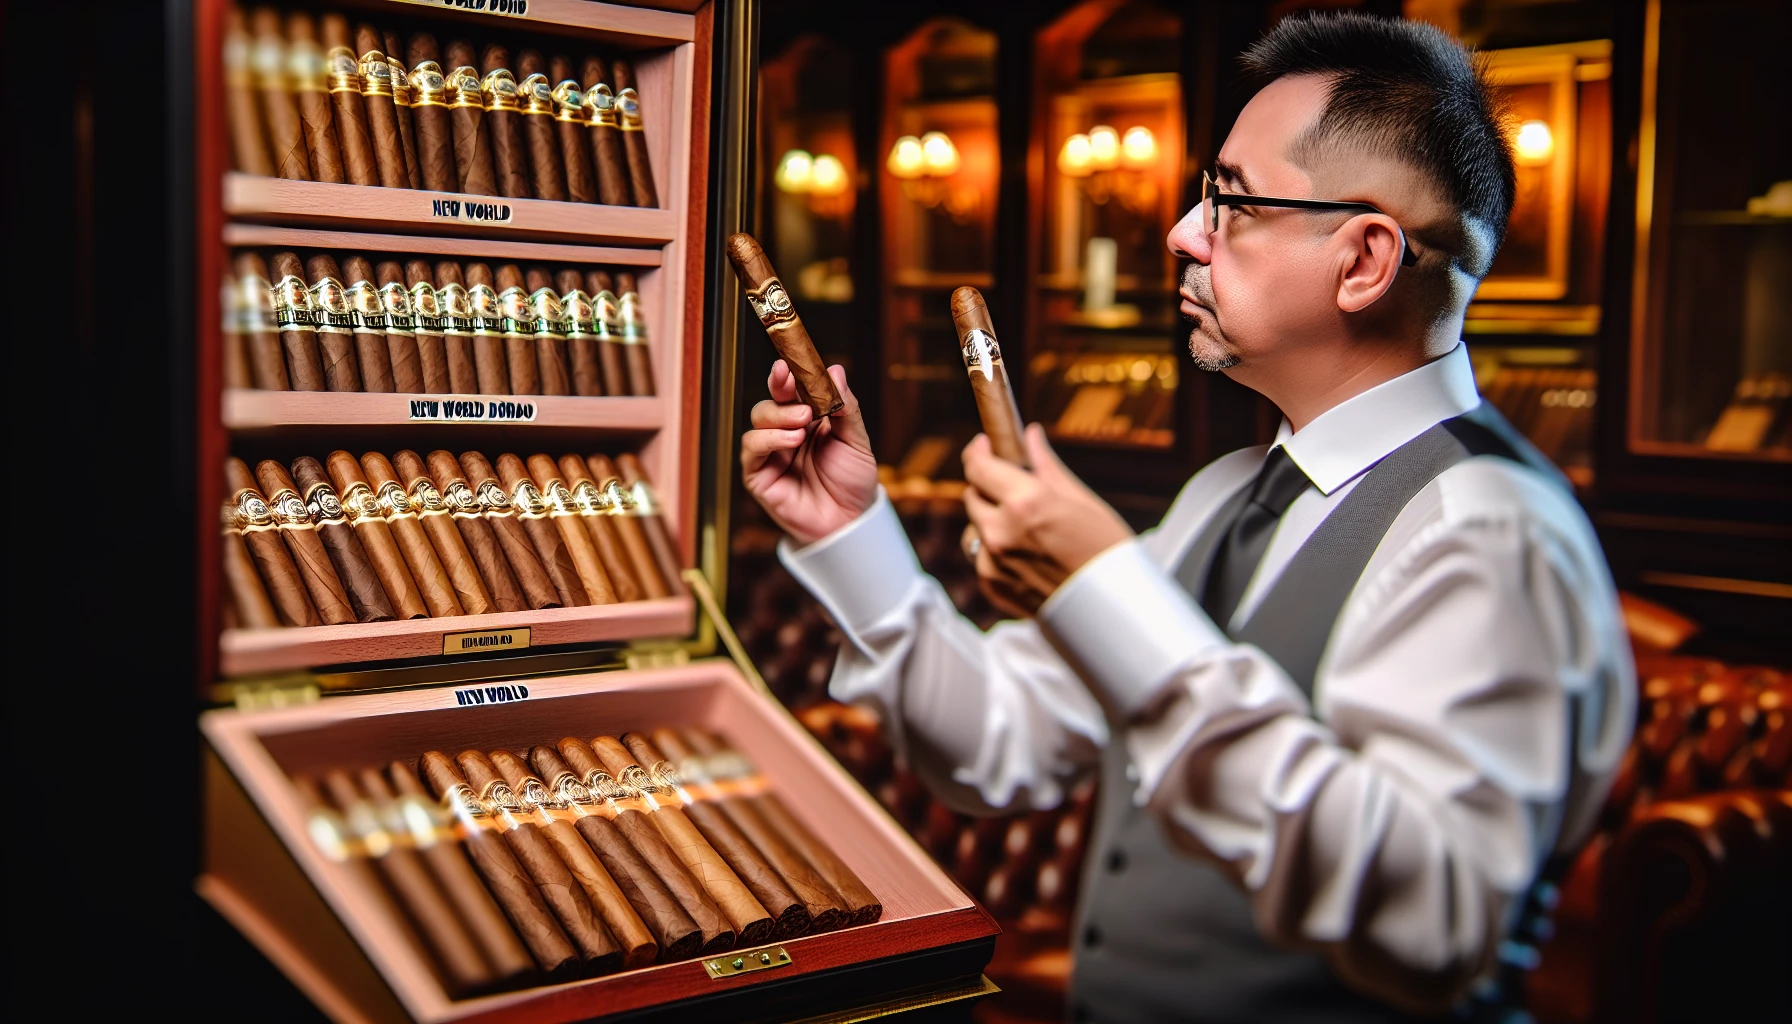 A person carefully selecting a New World Dorado cigar from a humidor